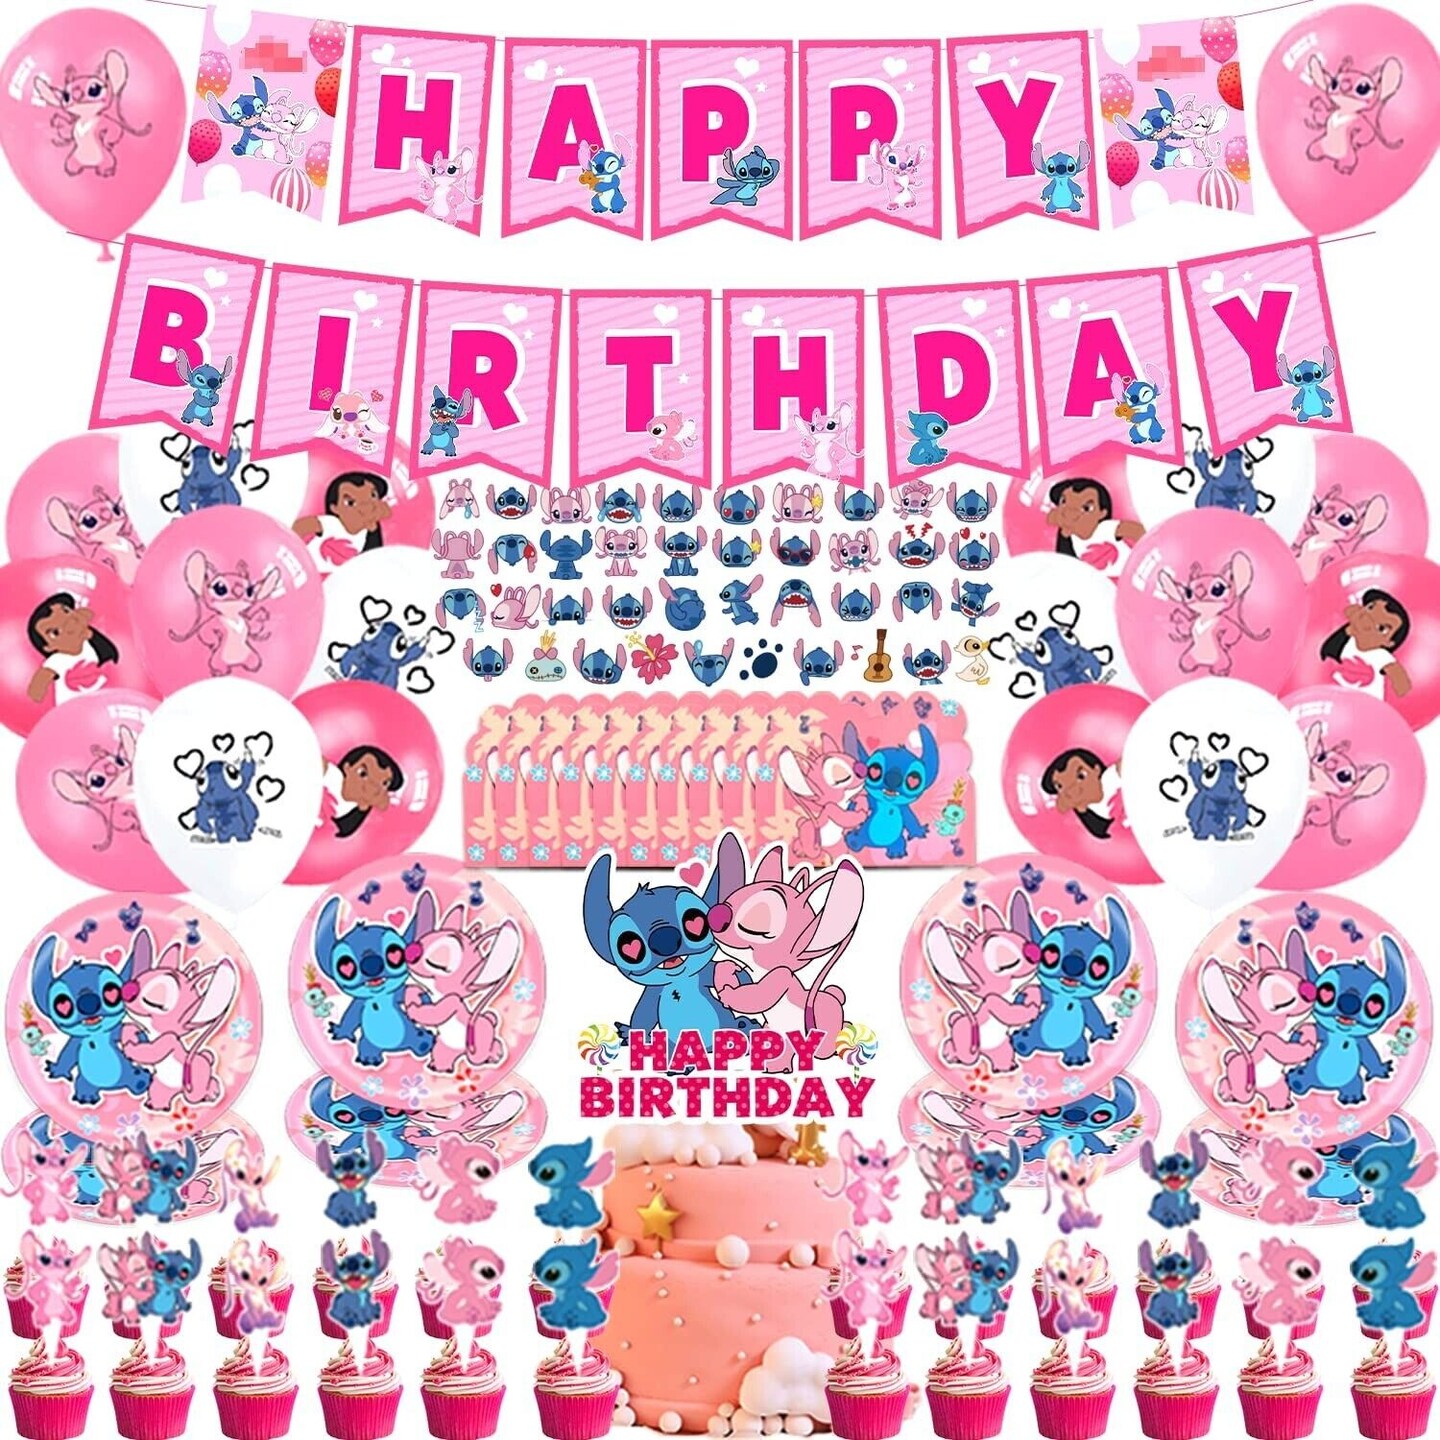 NEW Pink Lilo & Stitch Theme kIDS Birthday Party Supplies